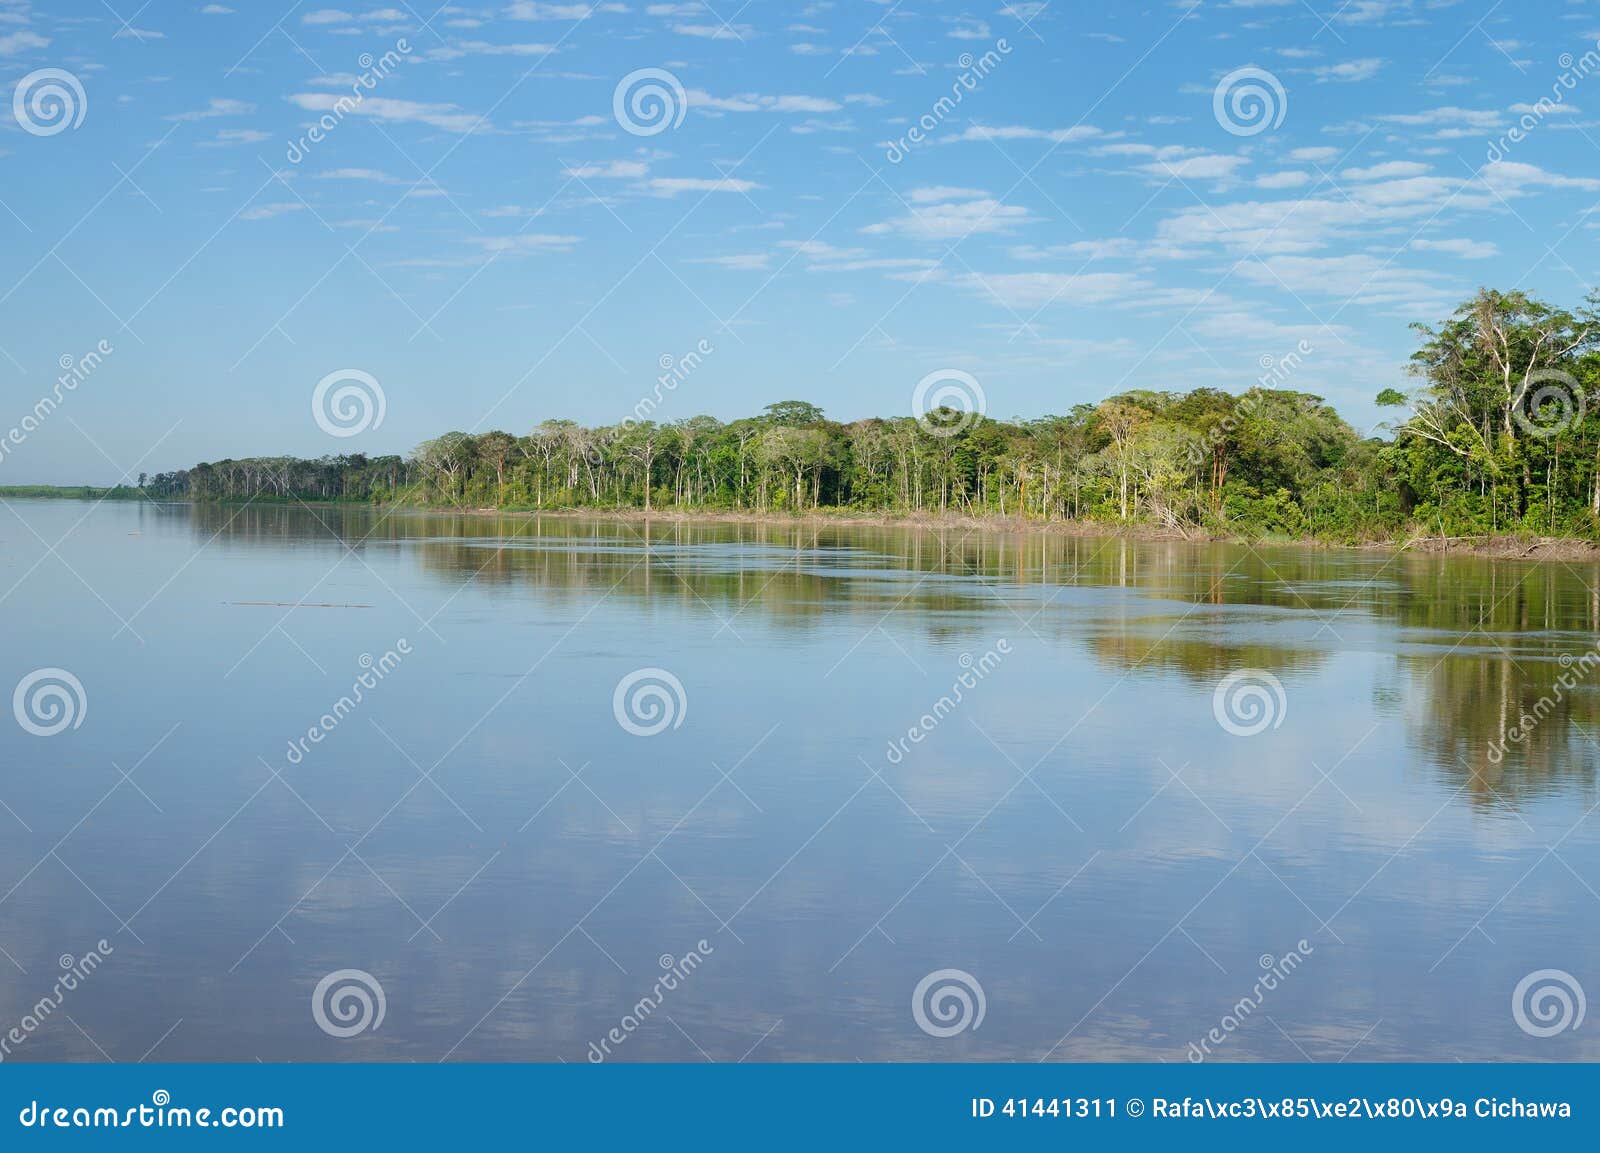 peruvian amazonas, amazon river landscape